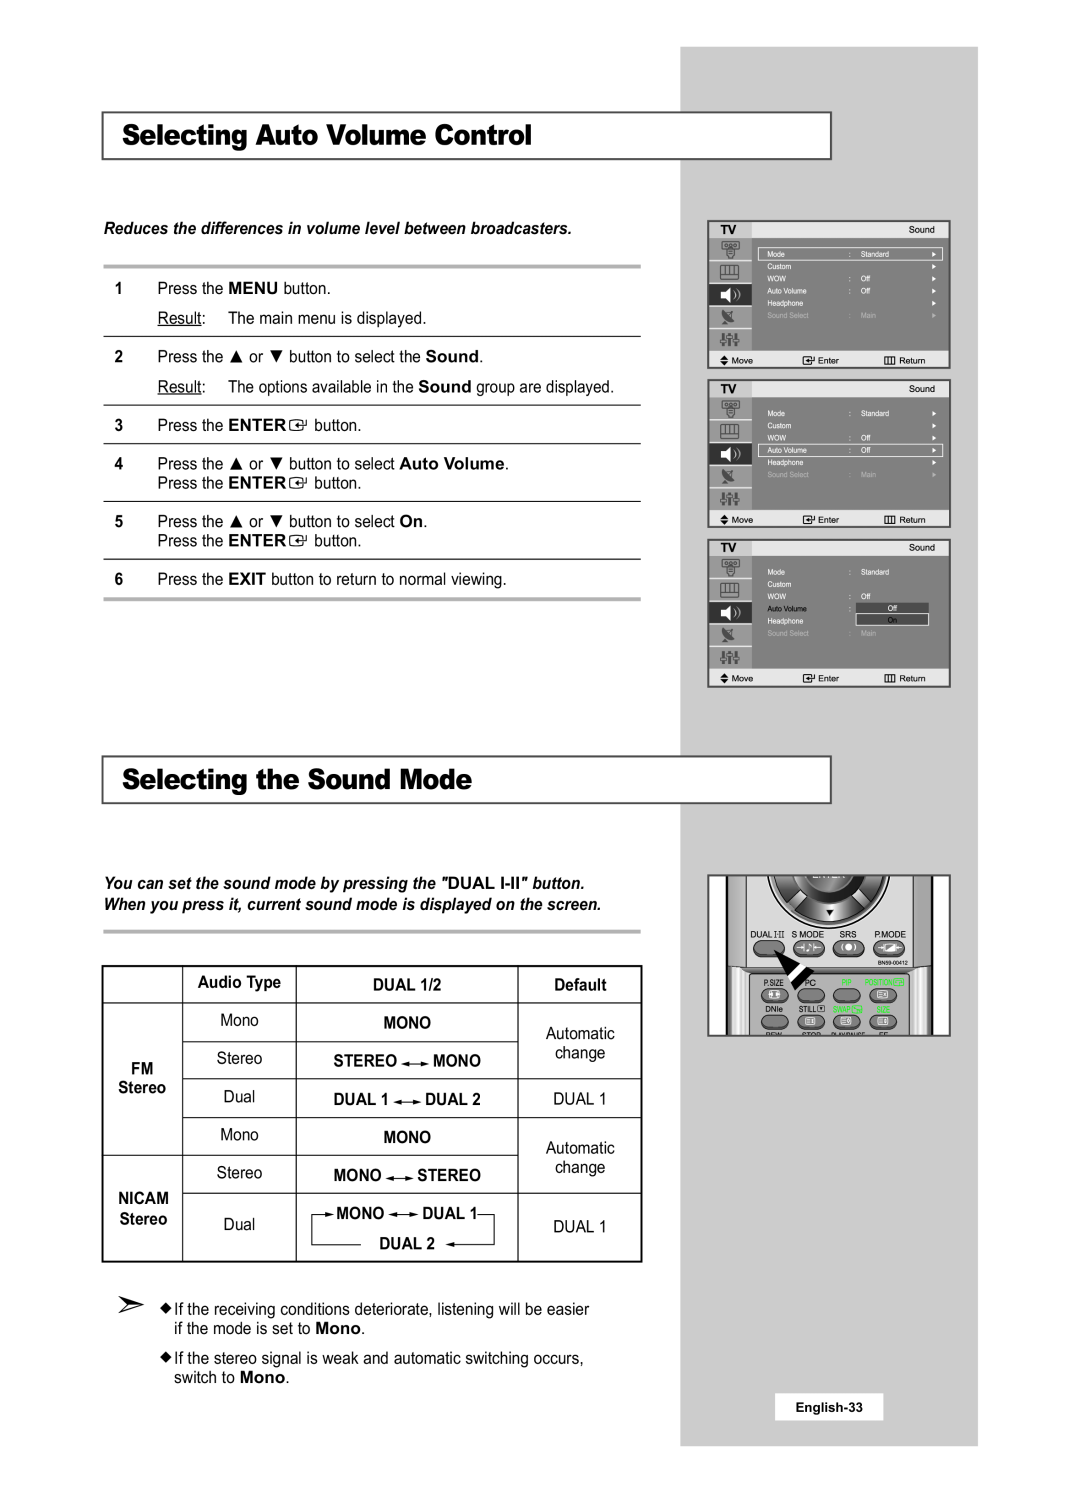 Samsung LA22N21B Selecting Auto Volume Control, Selecting the Sound Mode, Audio Type, DUAL 1/2, Default, Stereo, Mono 